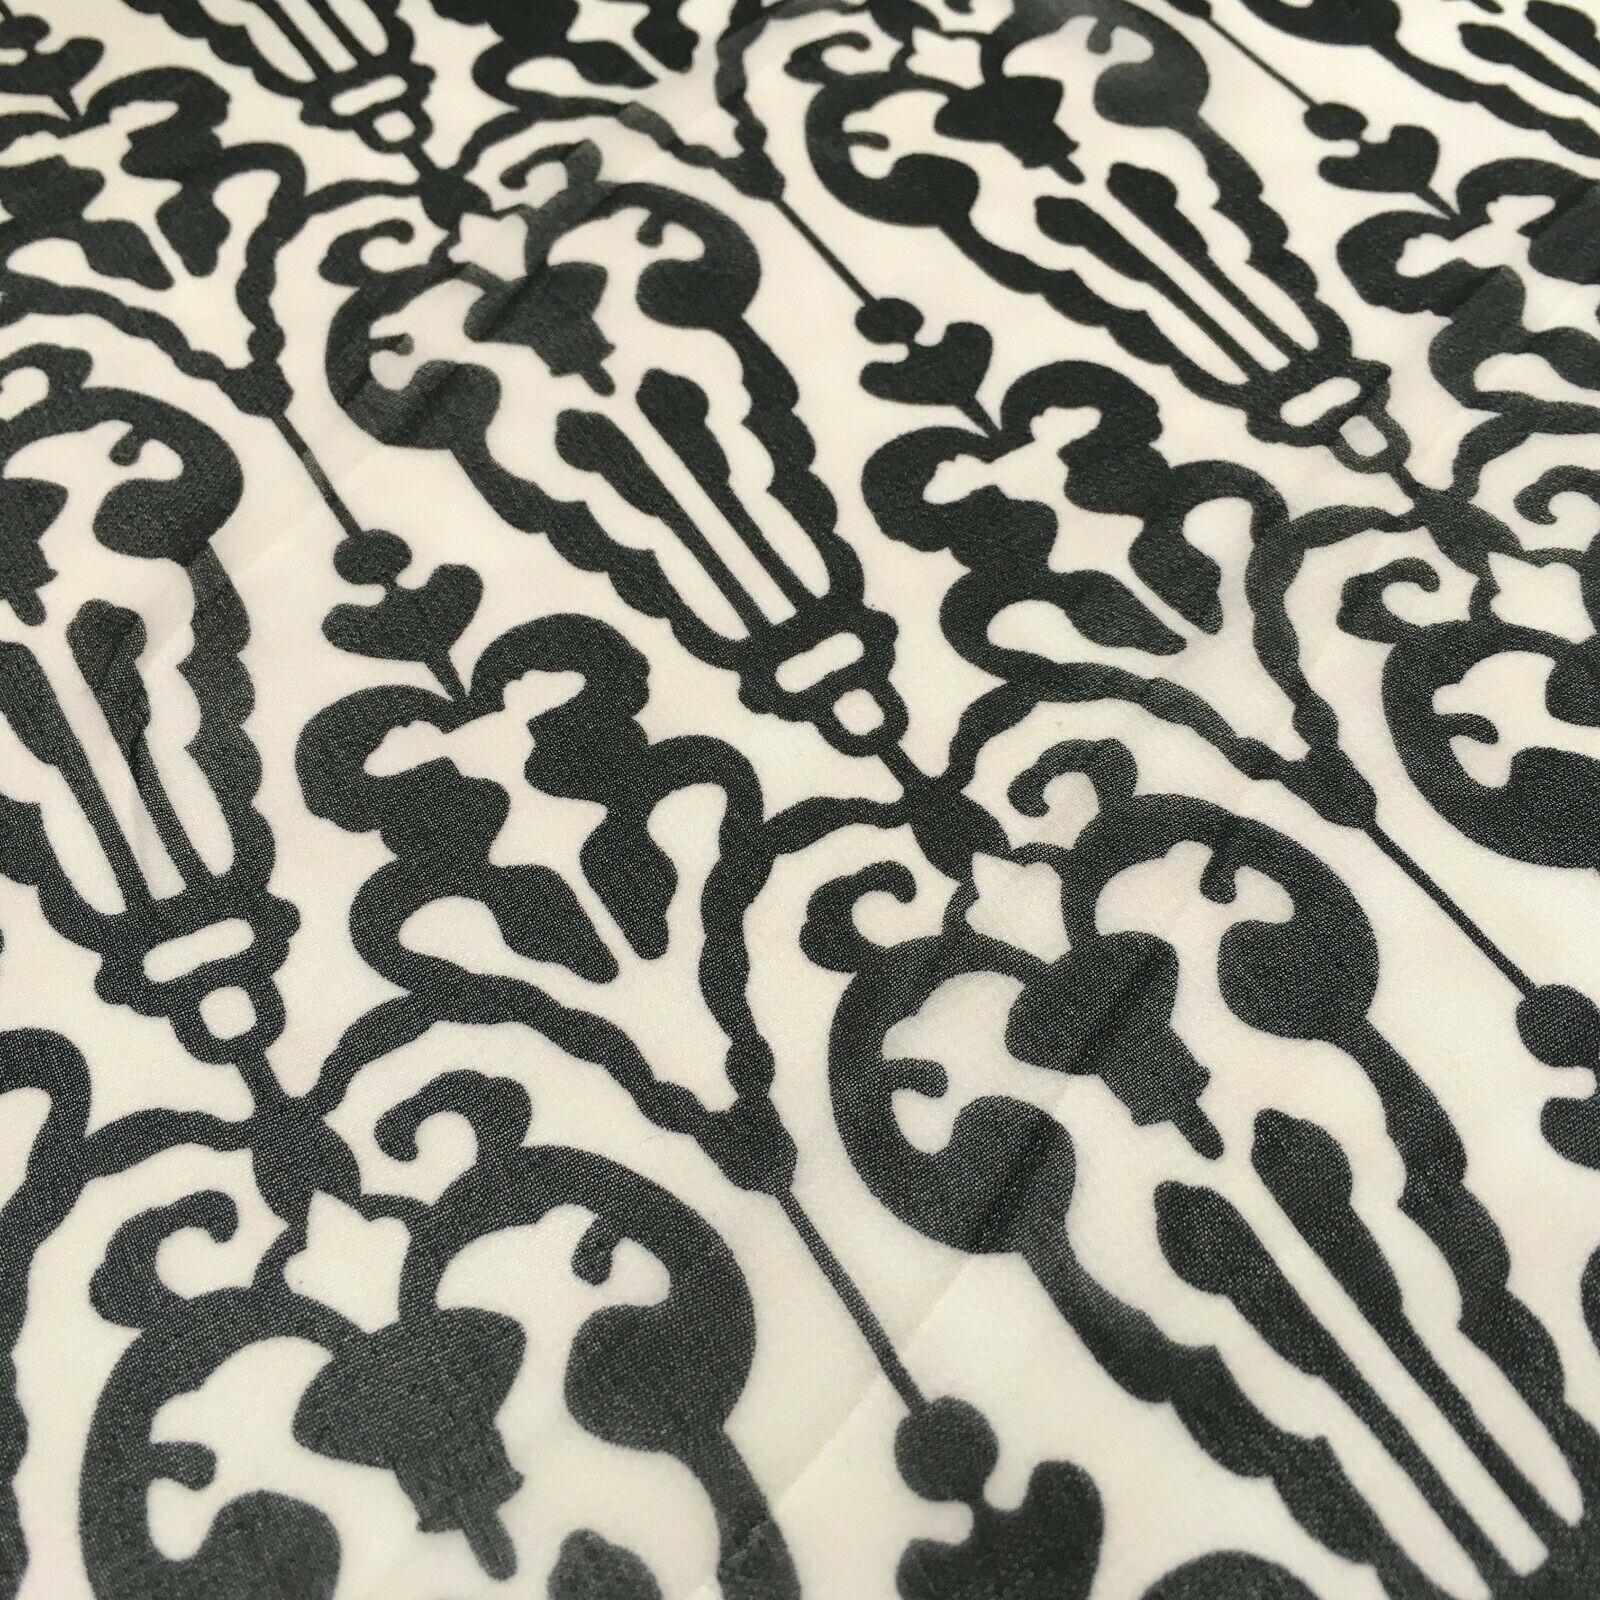 Black and White Ornamental Printed Crepe chiffon Dress Fabric 150 cm MK1190-32